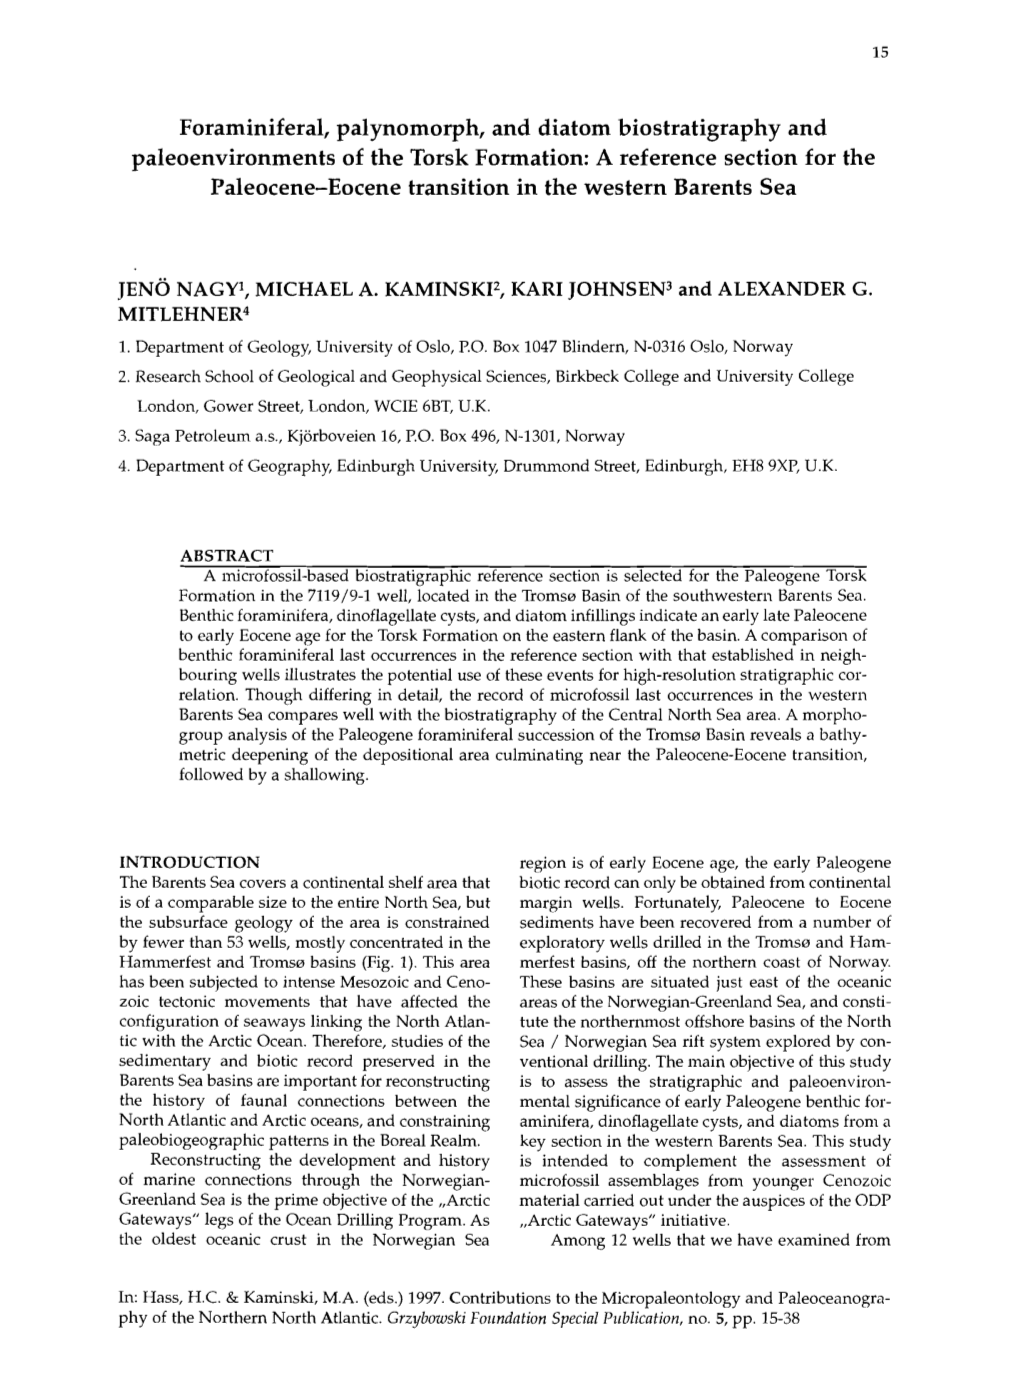 Foraminiferal, Palynomorph, and Diatom Biostratigraphy And